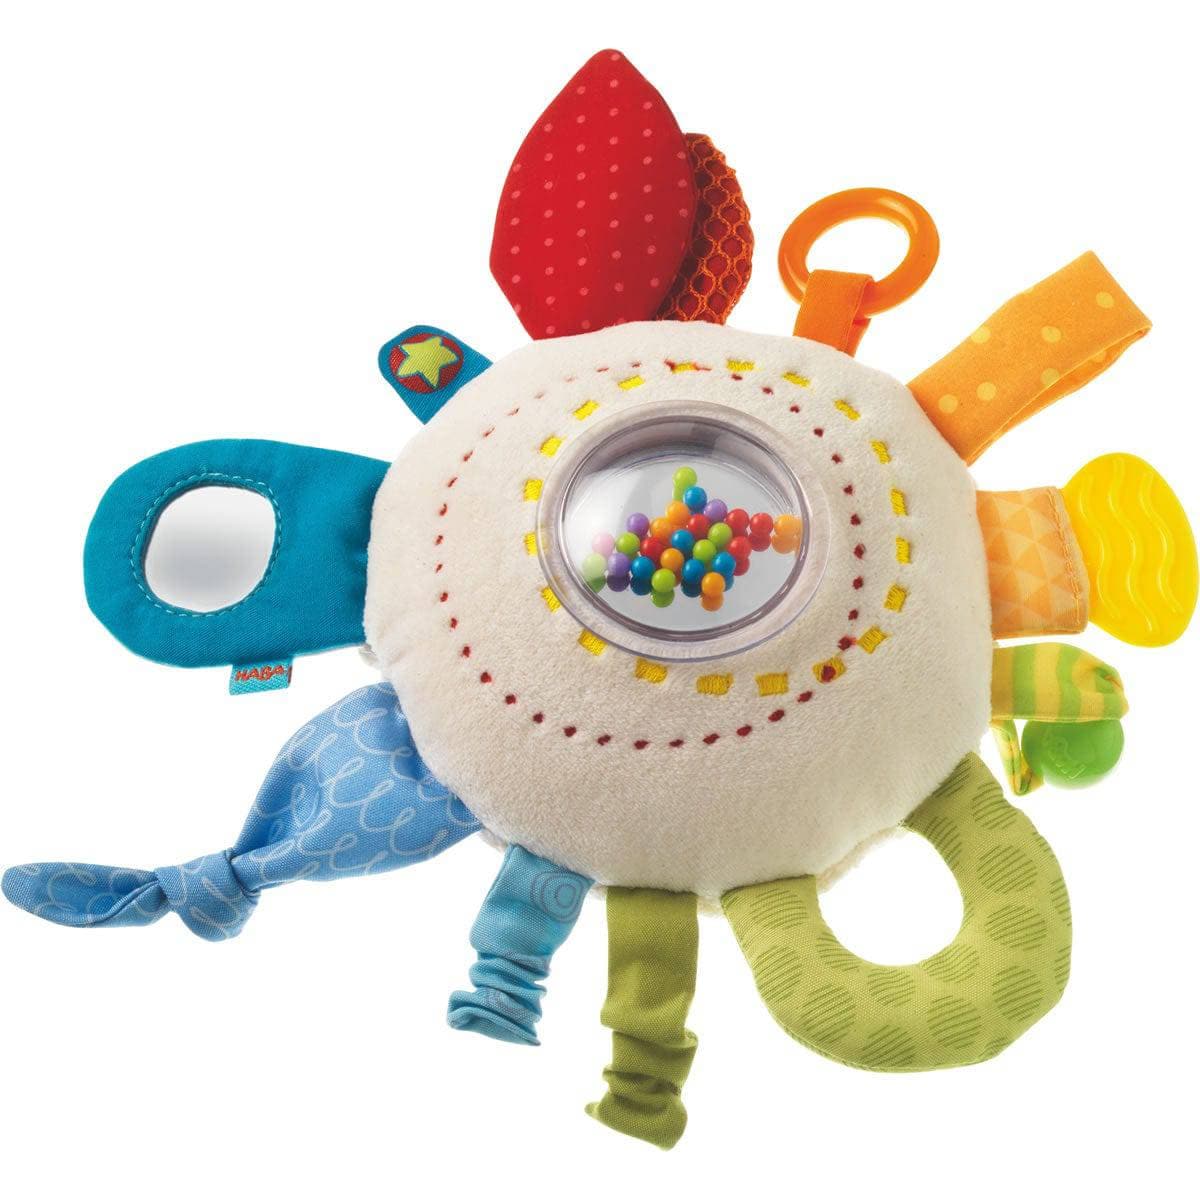 Teether Cuddly Rainbow Round Activity Toy - HABA USA